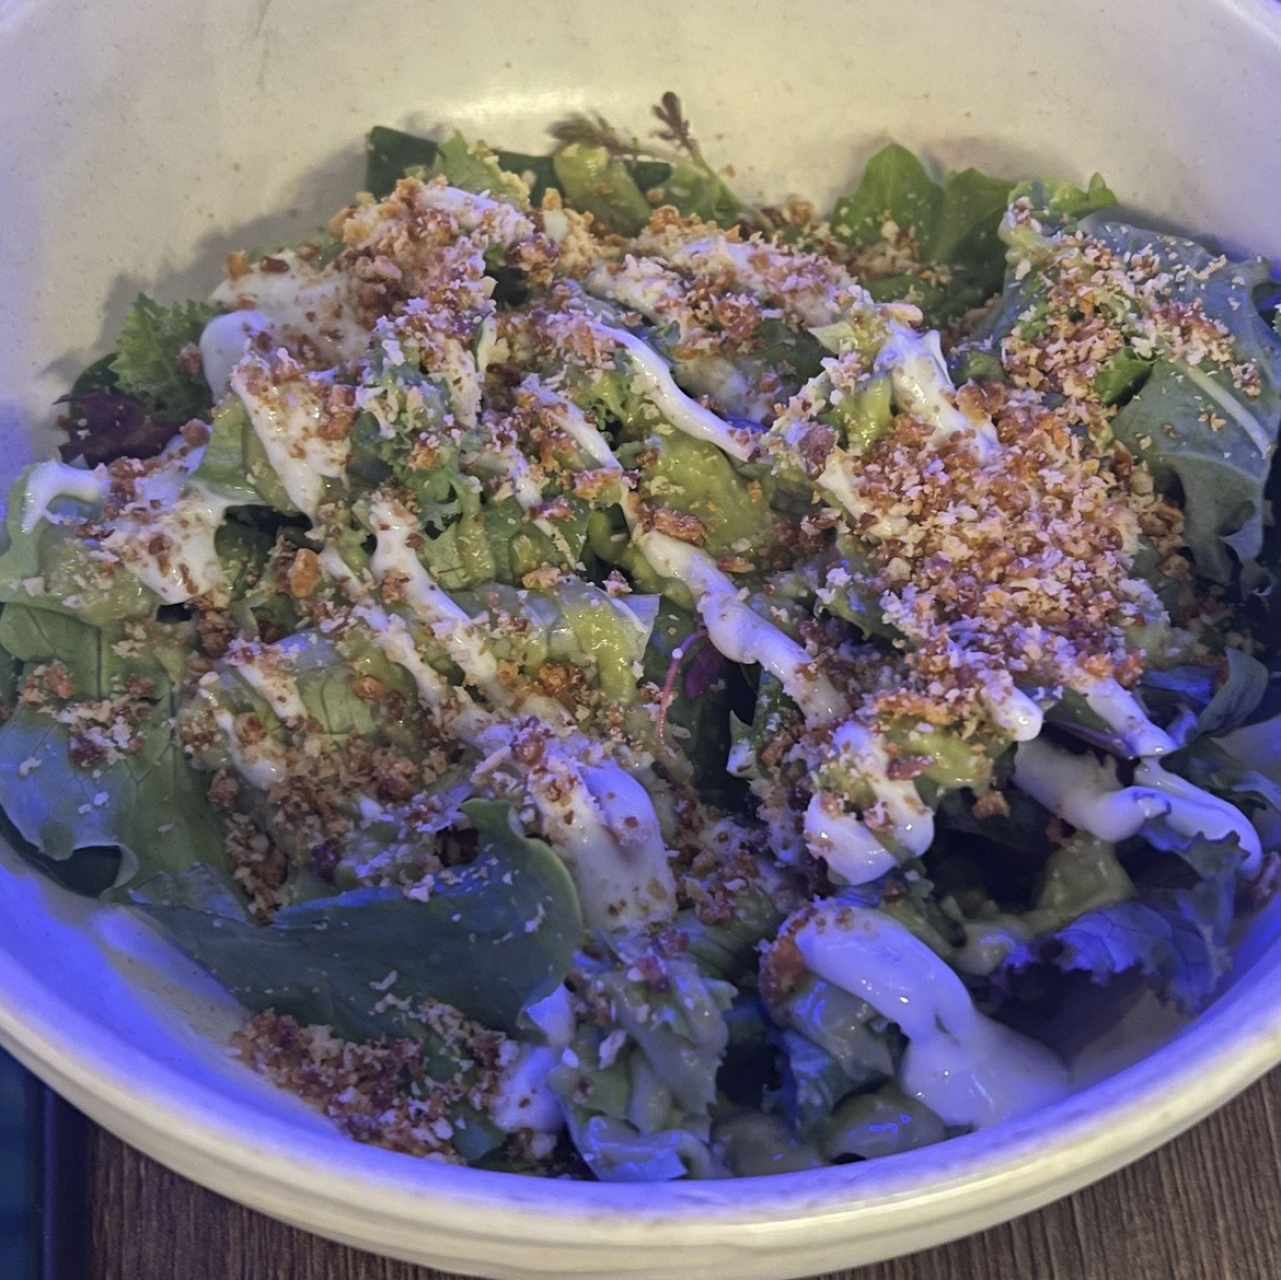 Diske-cobb salad